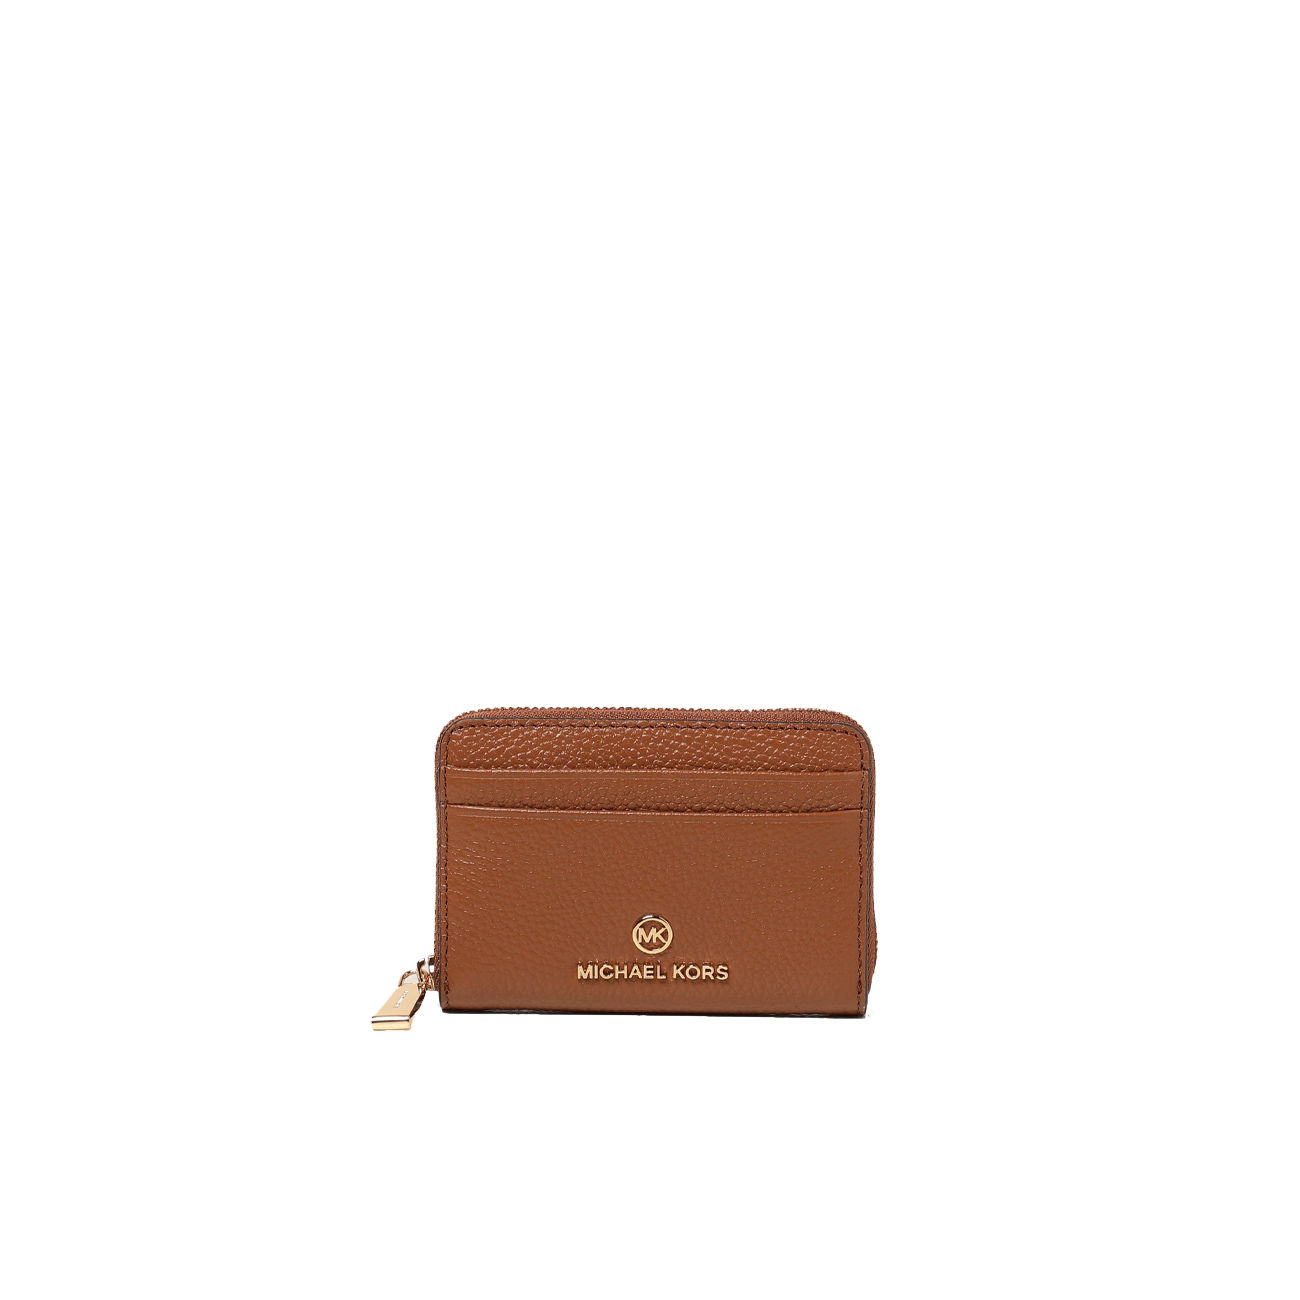 Wallets & purses Michael Kors - Jet Set wallet in Soft Pink color